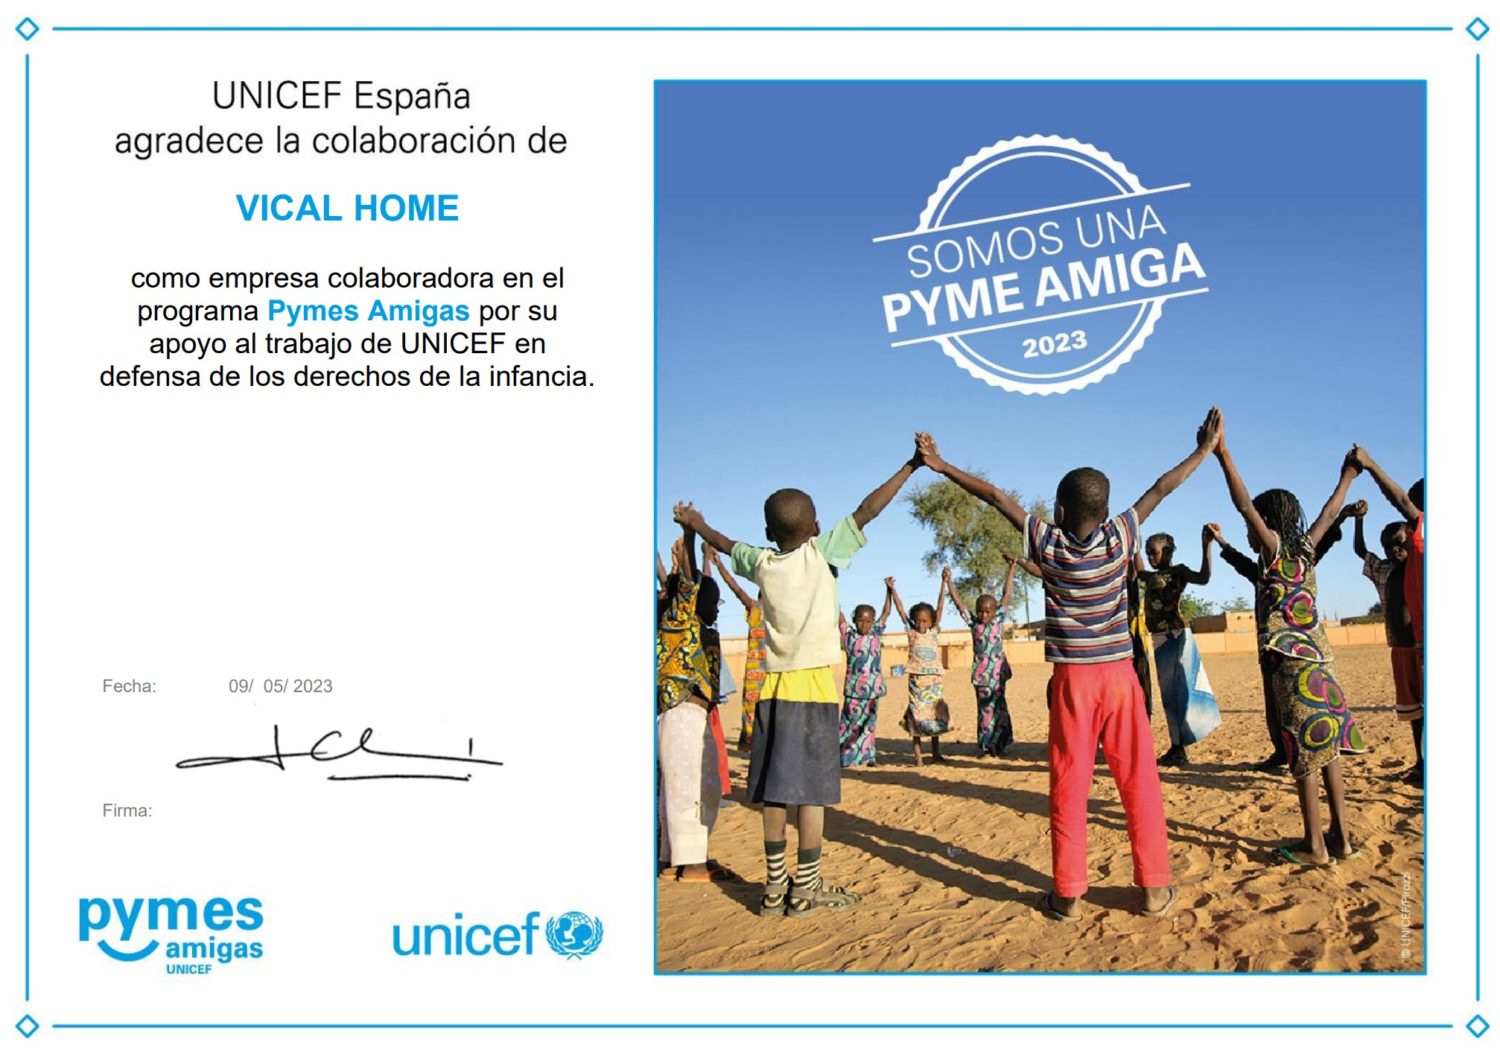 UNICEF VICAL